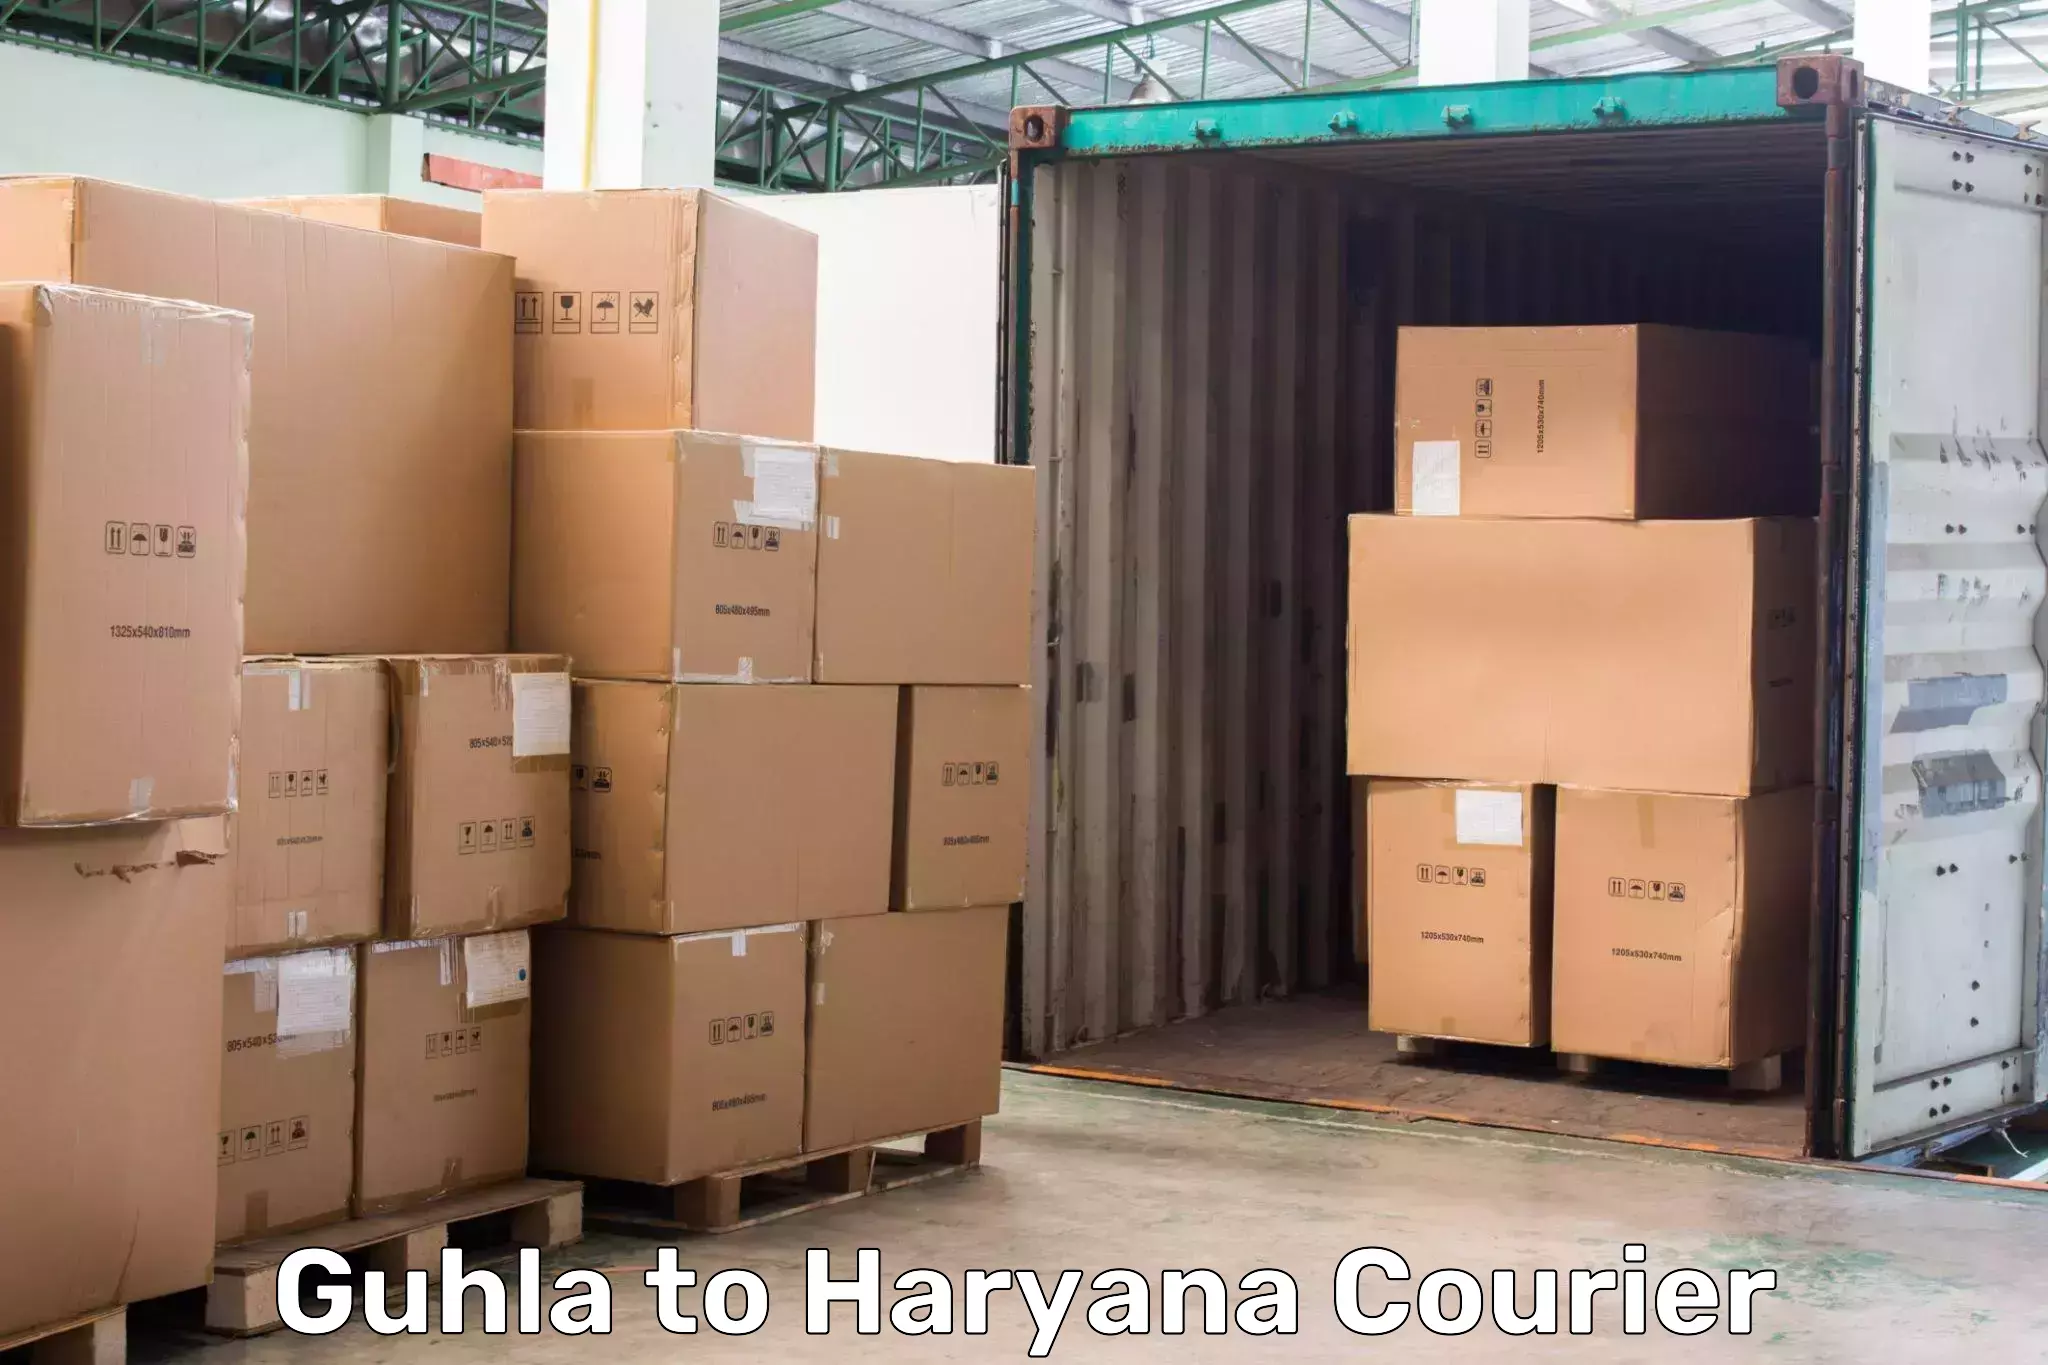 Courier service efficiency Guhla to Gurgaon